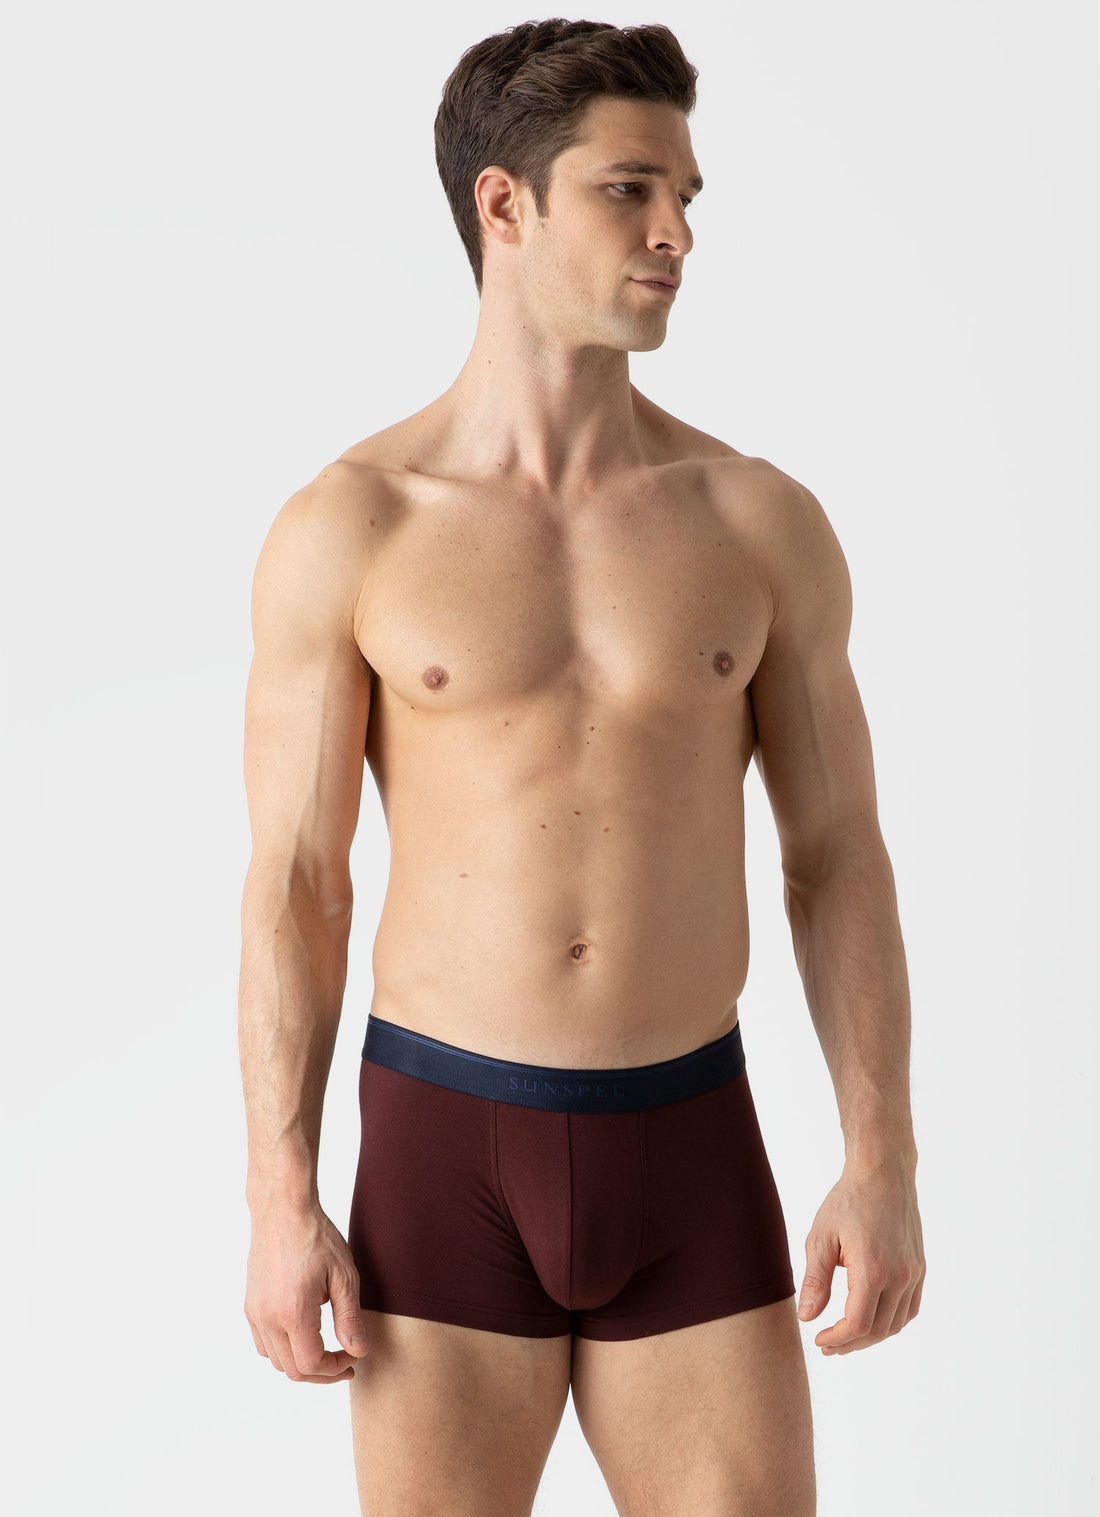 DAUZ High-End Authentic Men's Printed Underwear Cotton Comfy